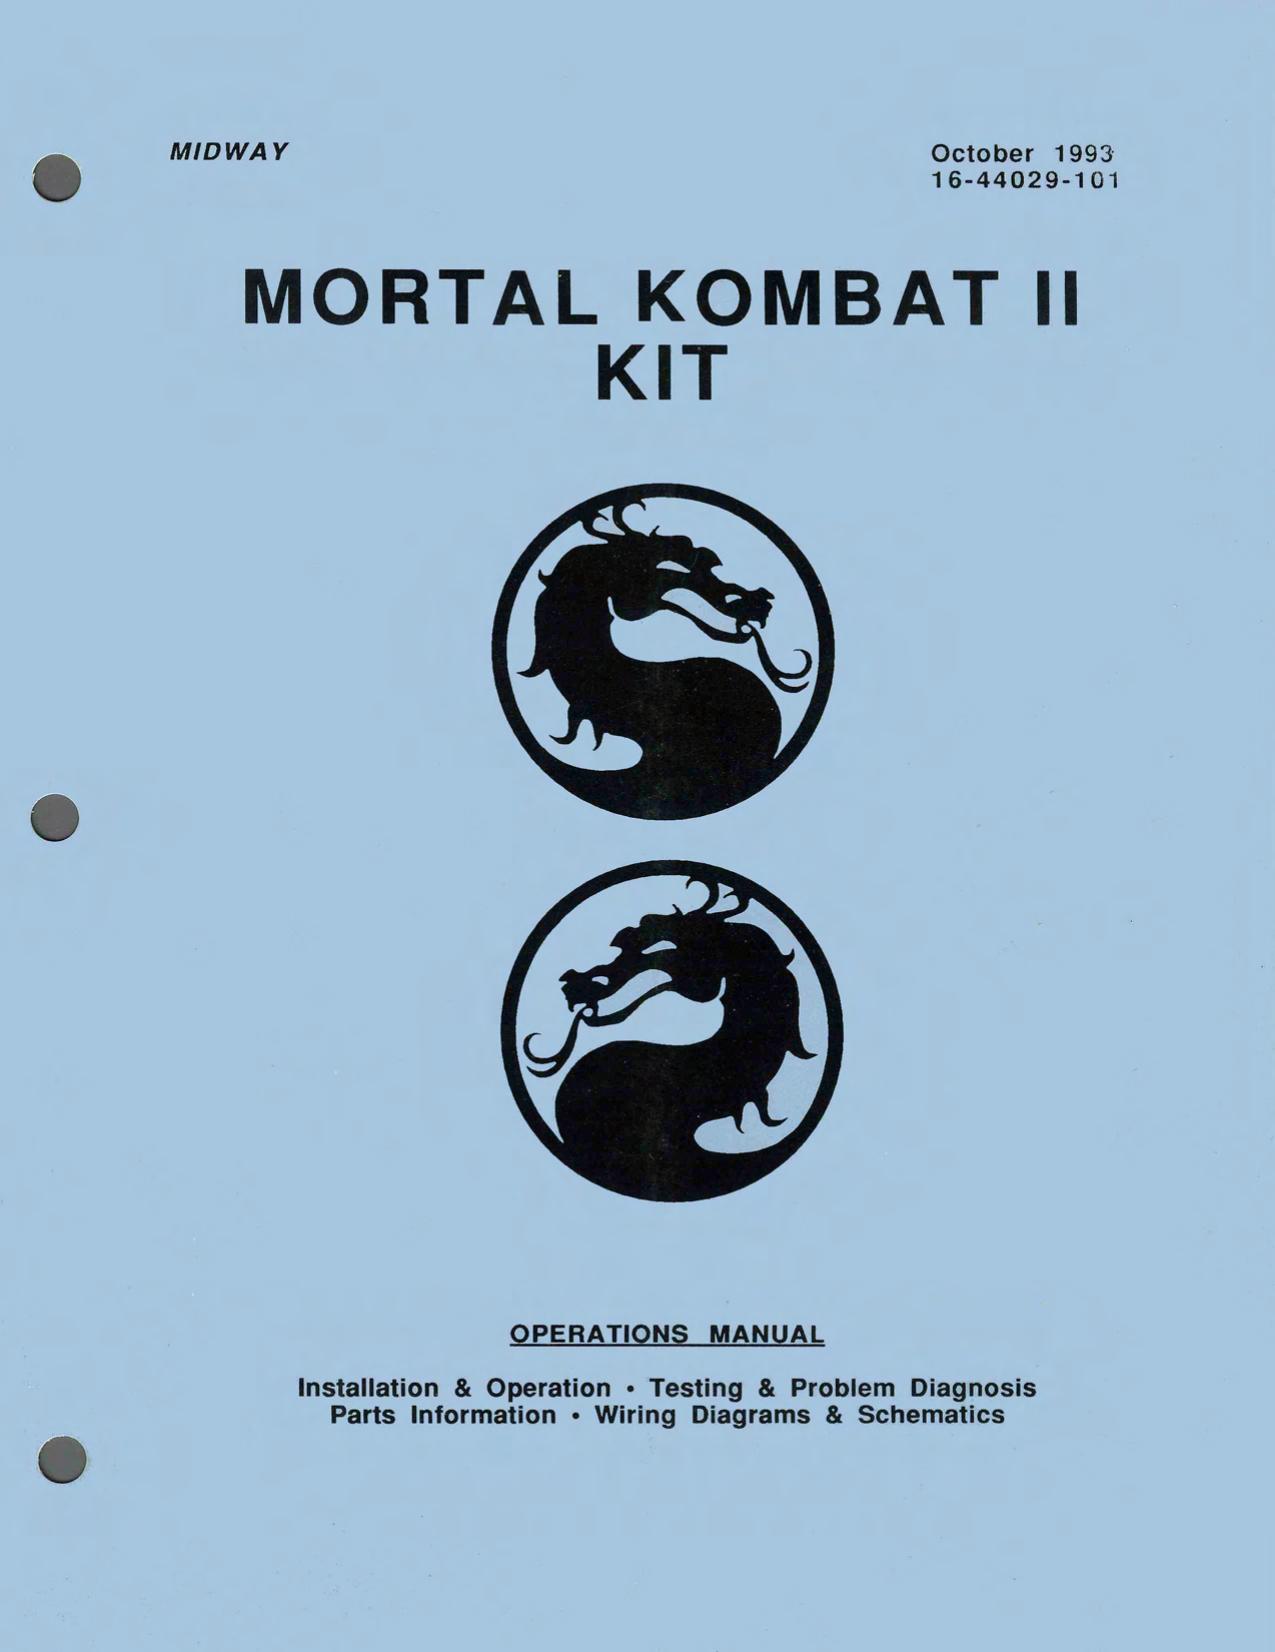 Mortal Kombat 2 Kit (16-44029-101 Oct 1993)